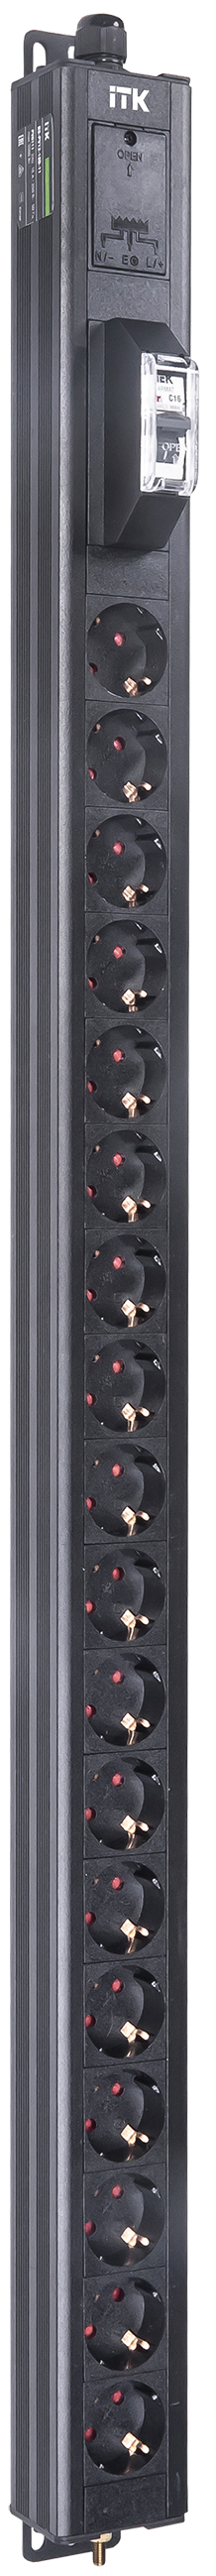 ITK BASE PDU вертикальный PV0111 24U 1 фаза 16А 18 розеток SCHUKO (немецкий стандарт) кабель 2,6м вилка SCHUKO (немецкий стандарт)